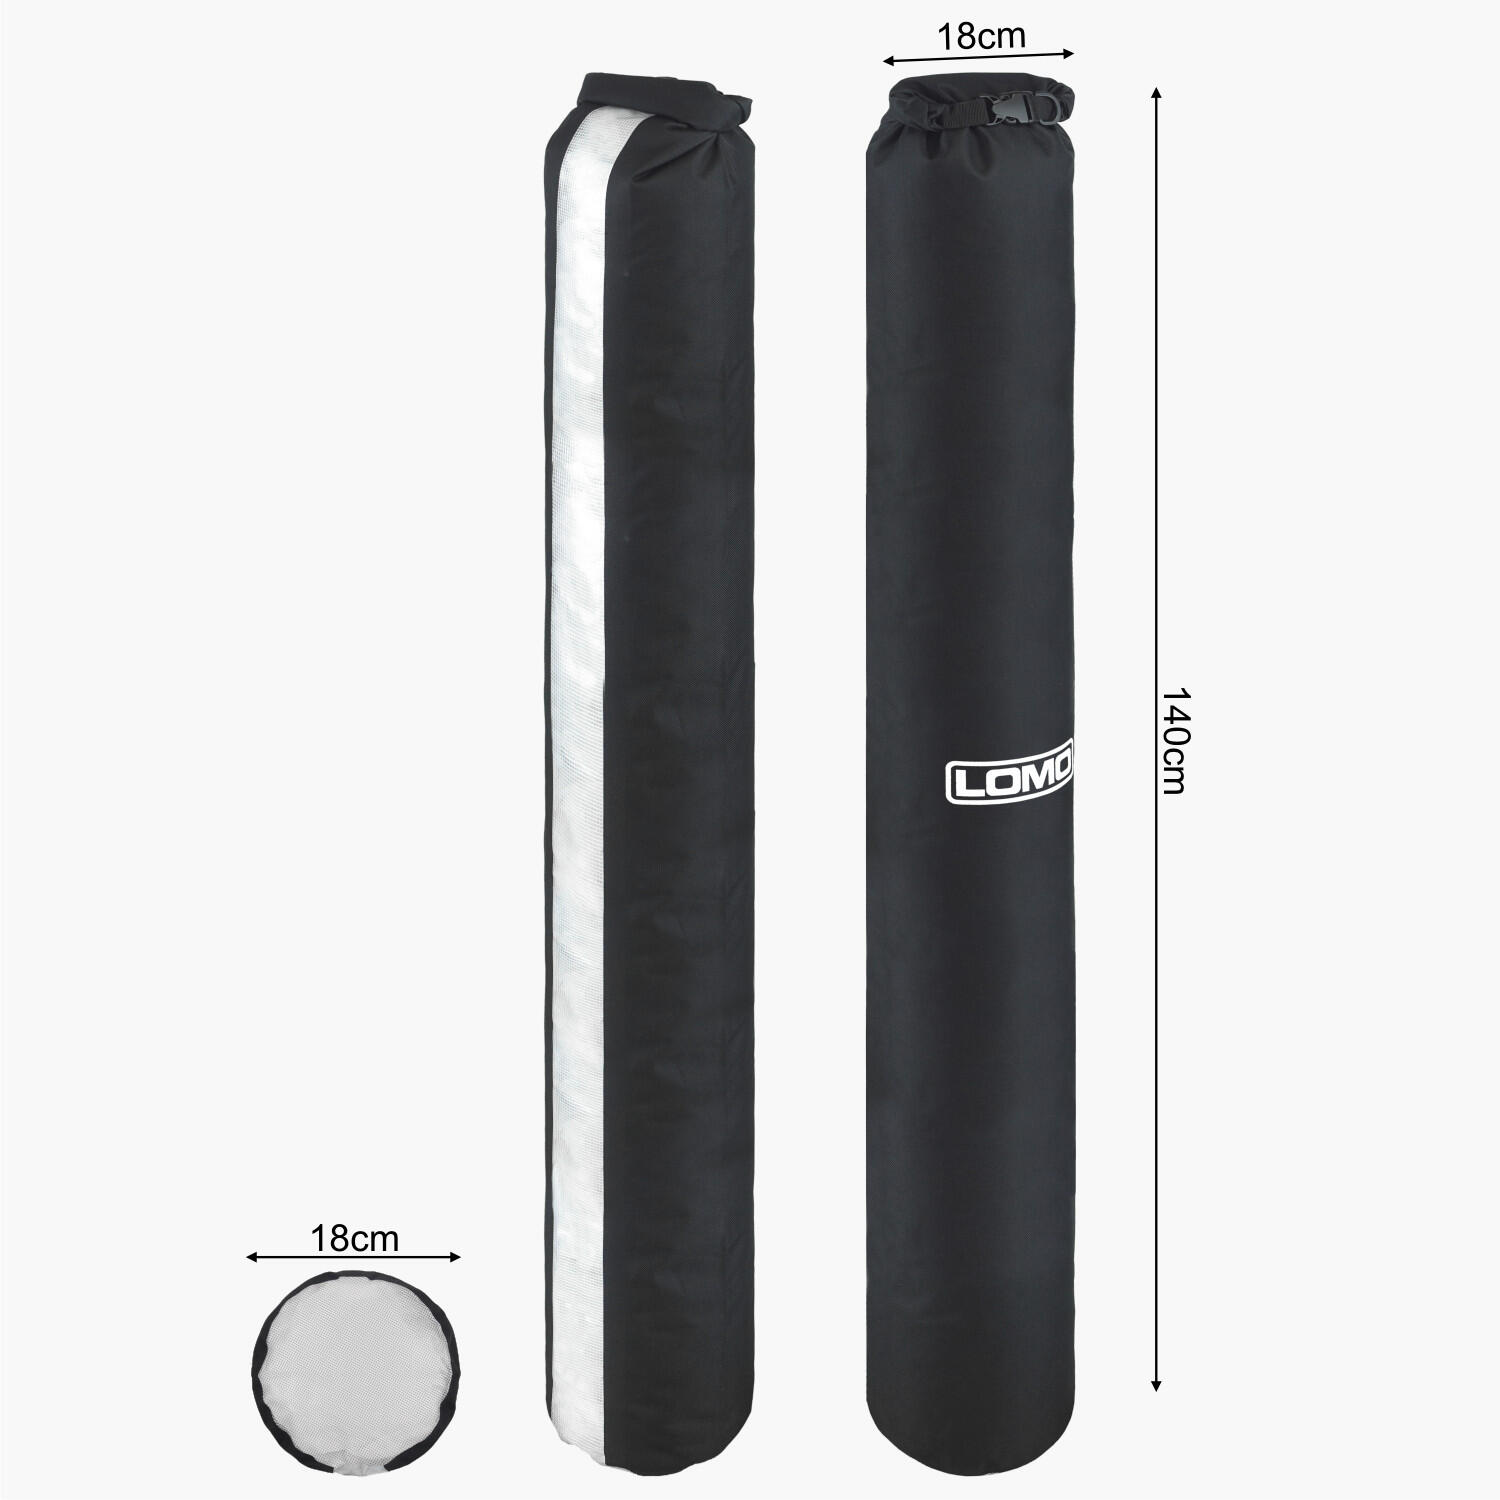 Lomo Extra Long Dry Bag - Black with Window 3/7